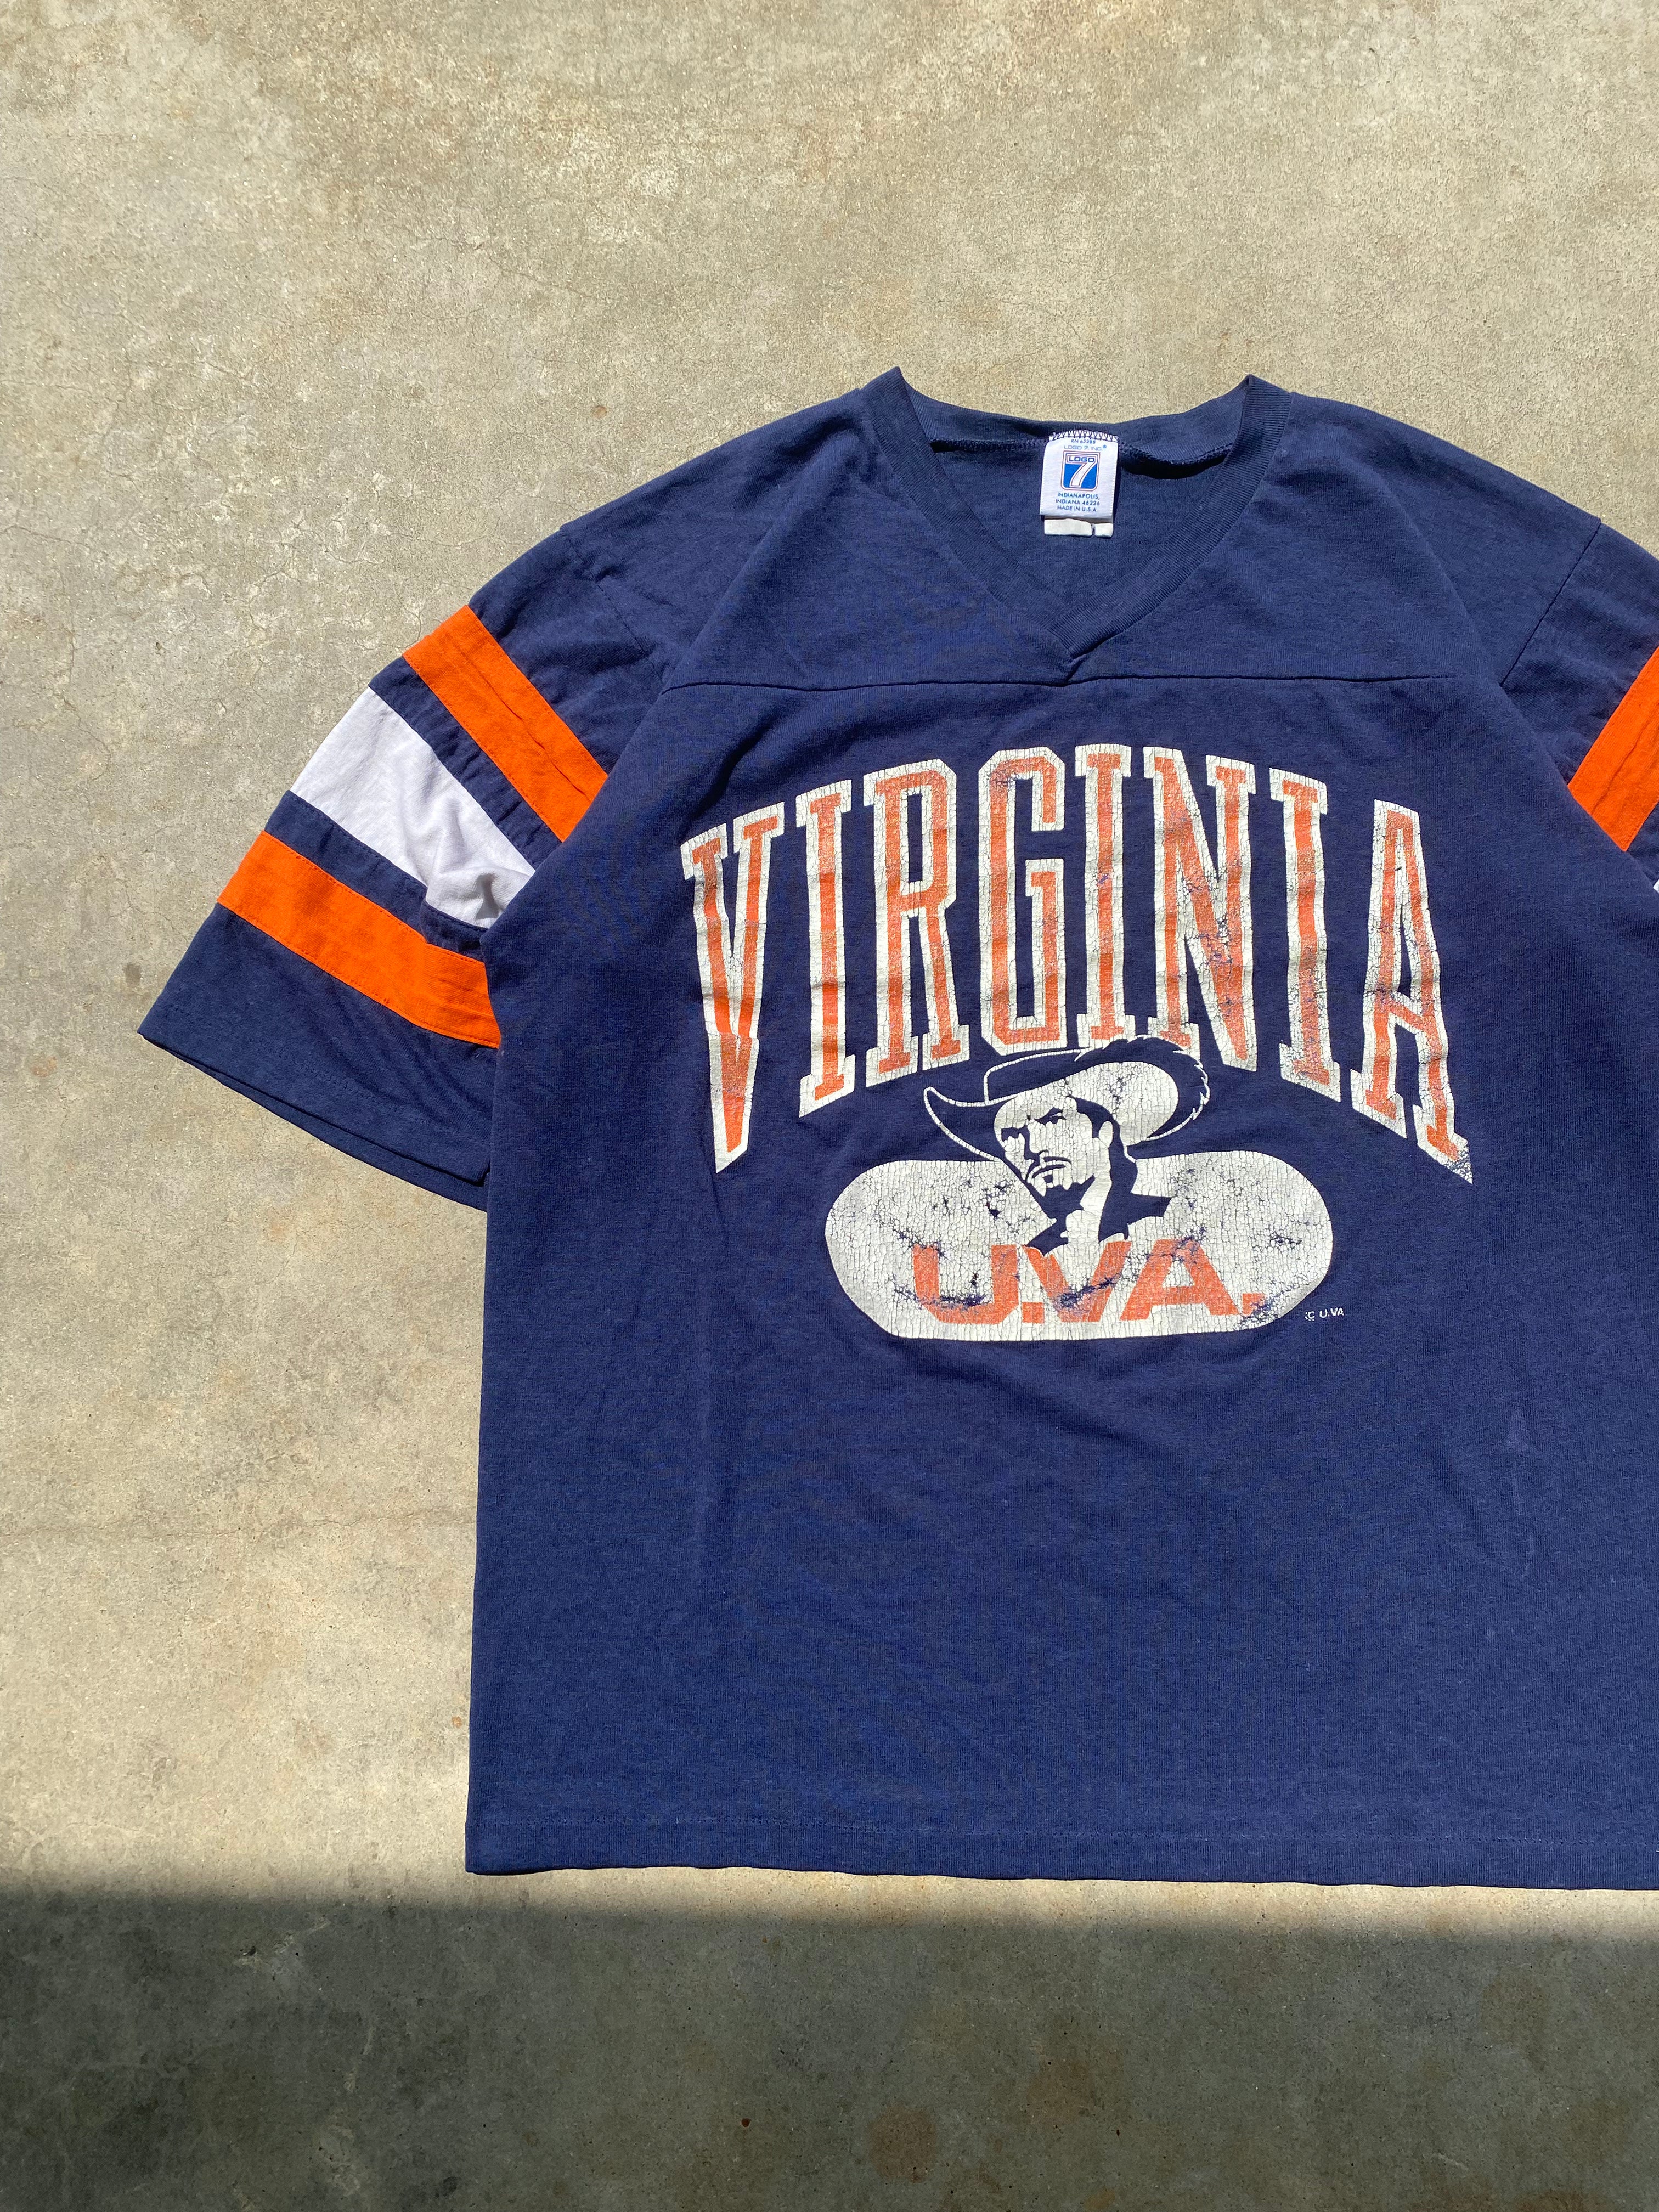 1980s University of Virginia Jersey T-Shirt (M)